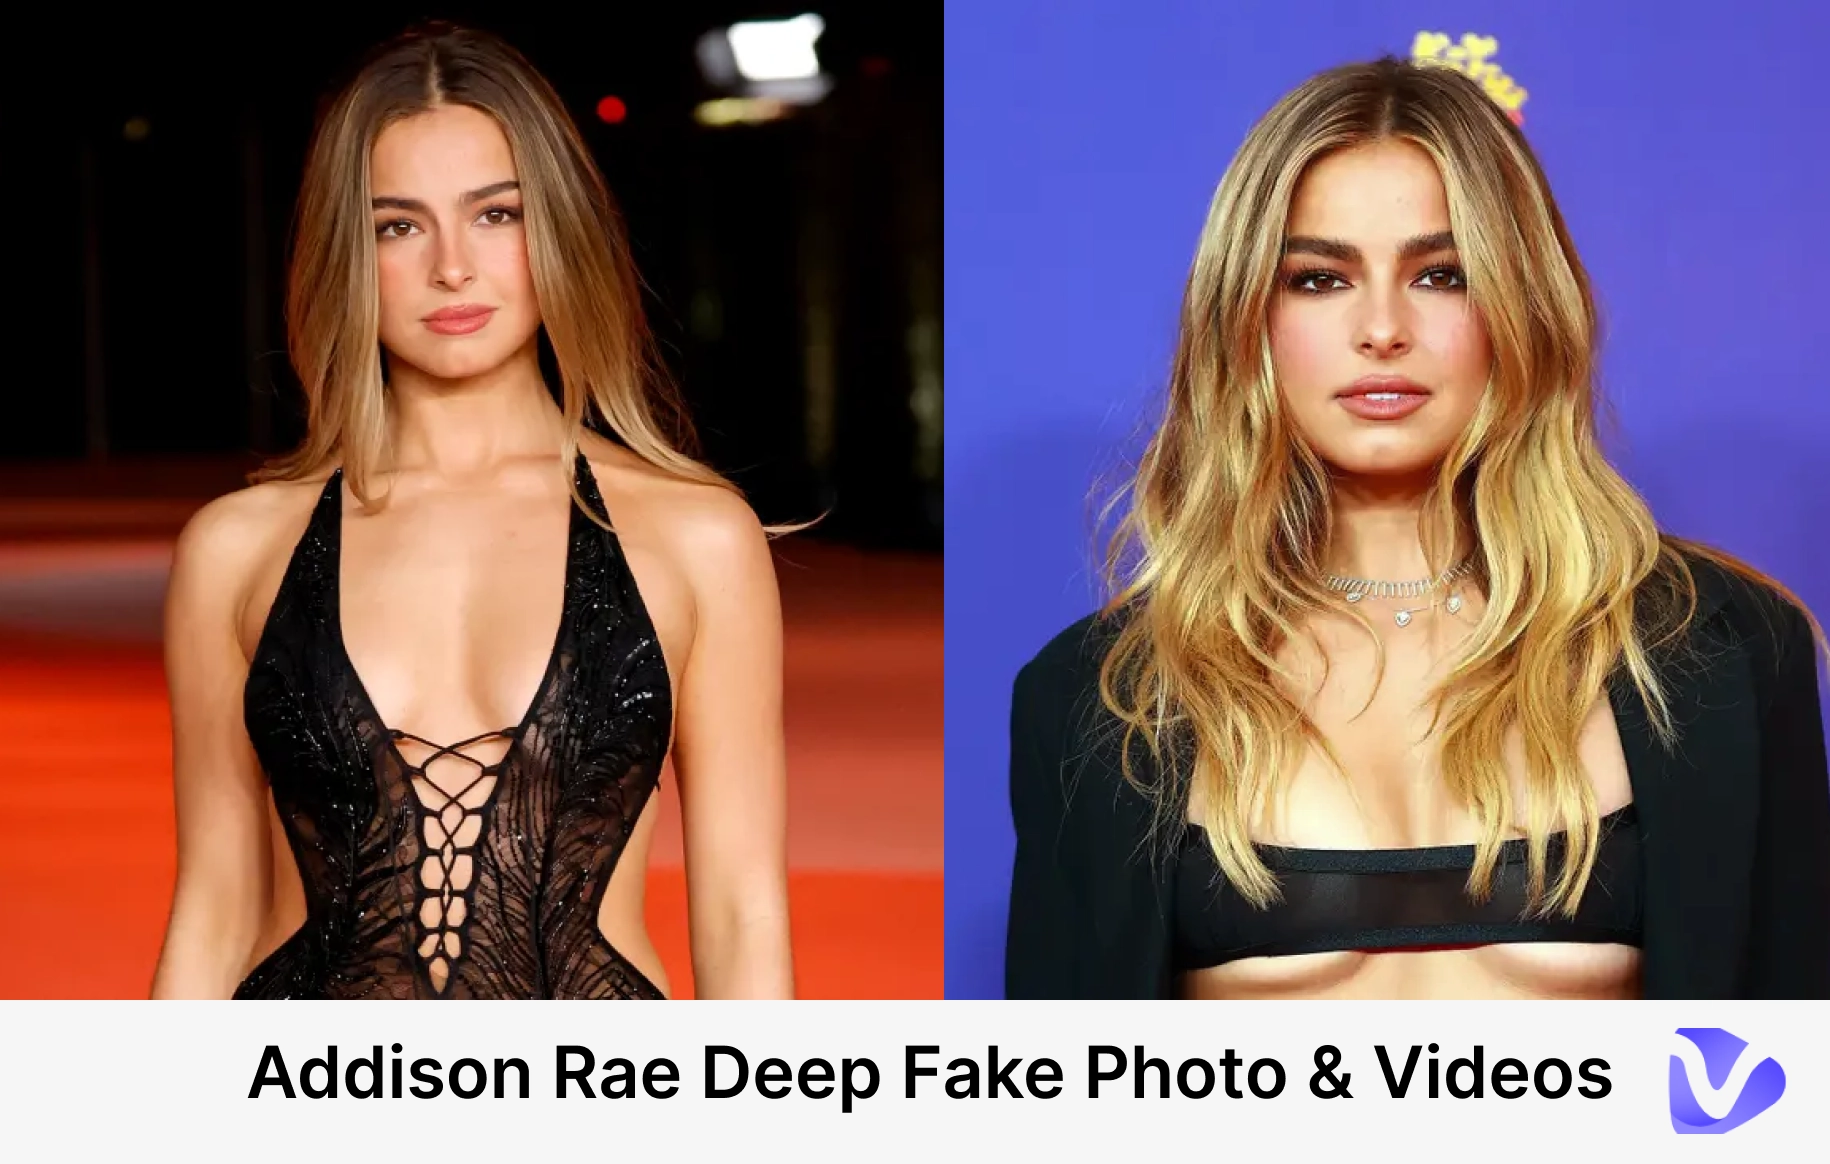 Addison Rae DeepFake Porn: Safe Addison Rae Deepfakes of Photos & Videos